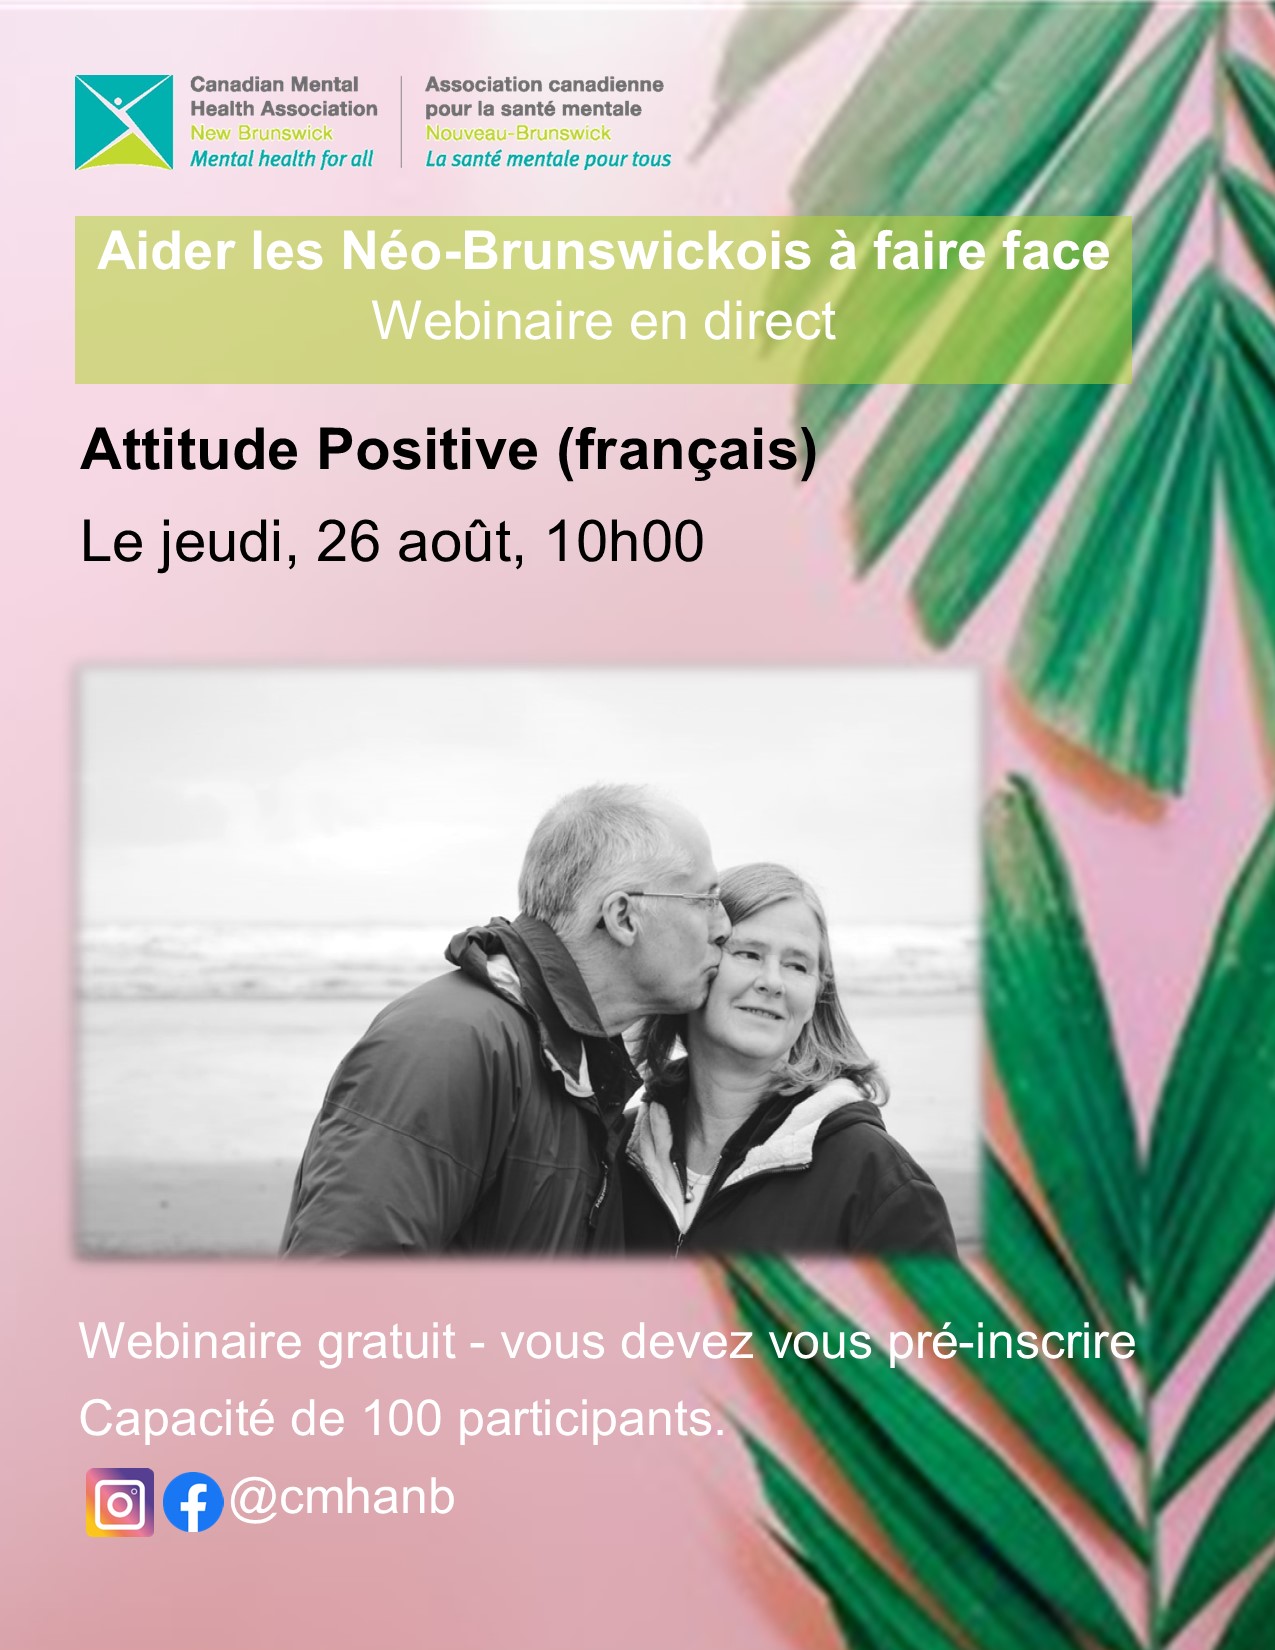 Attitude Positive